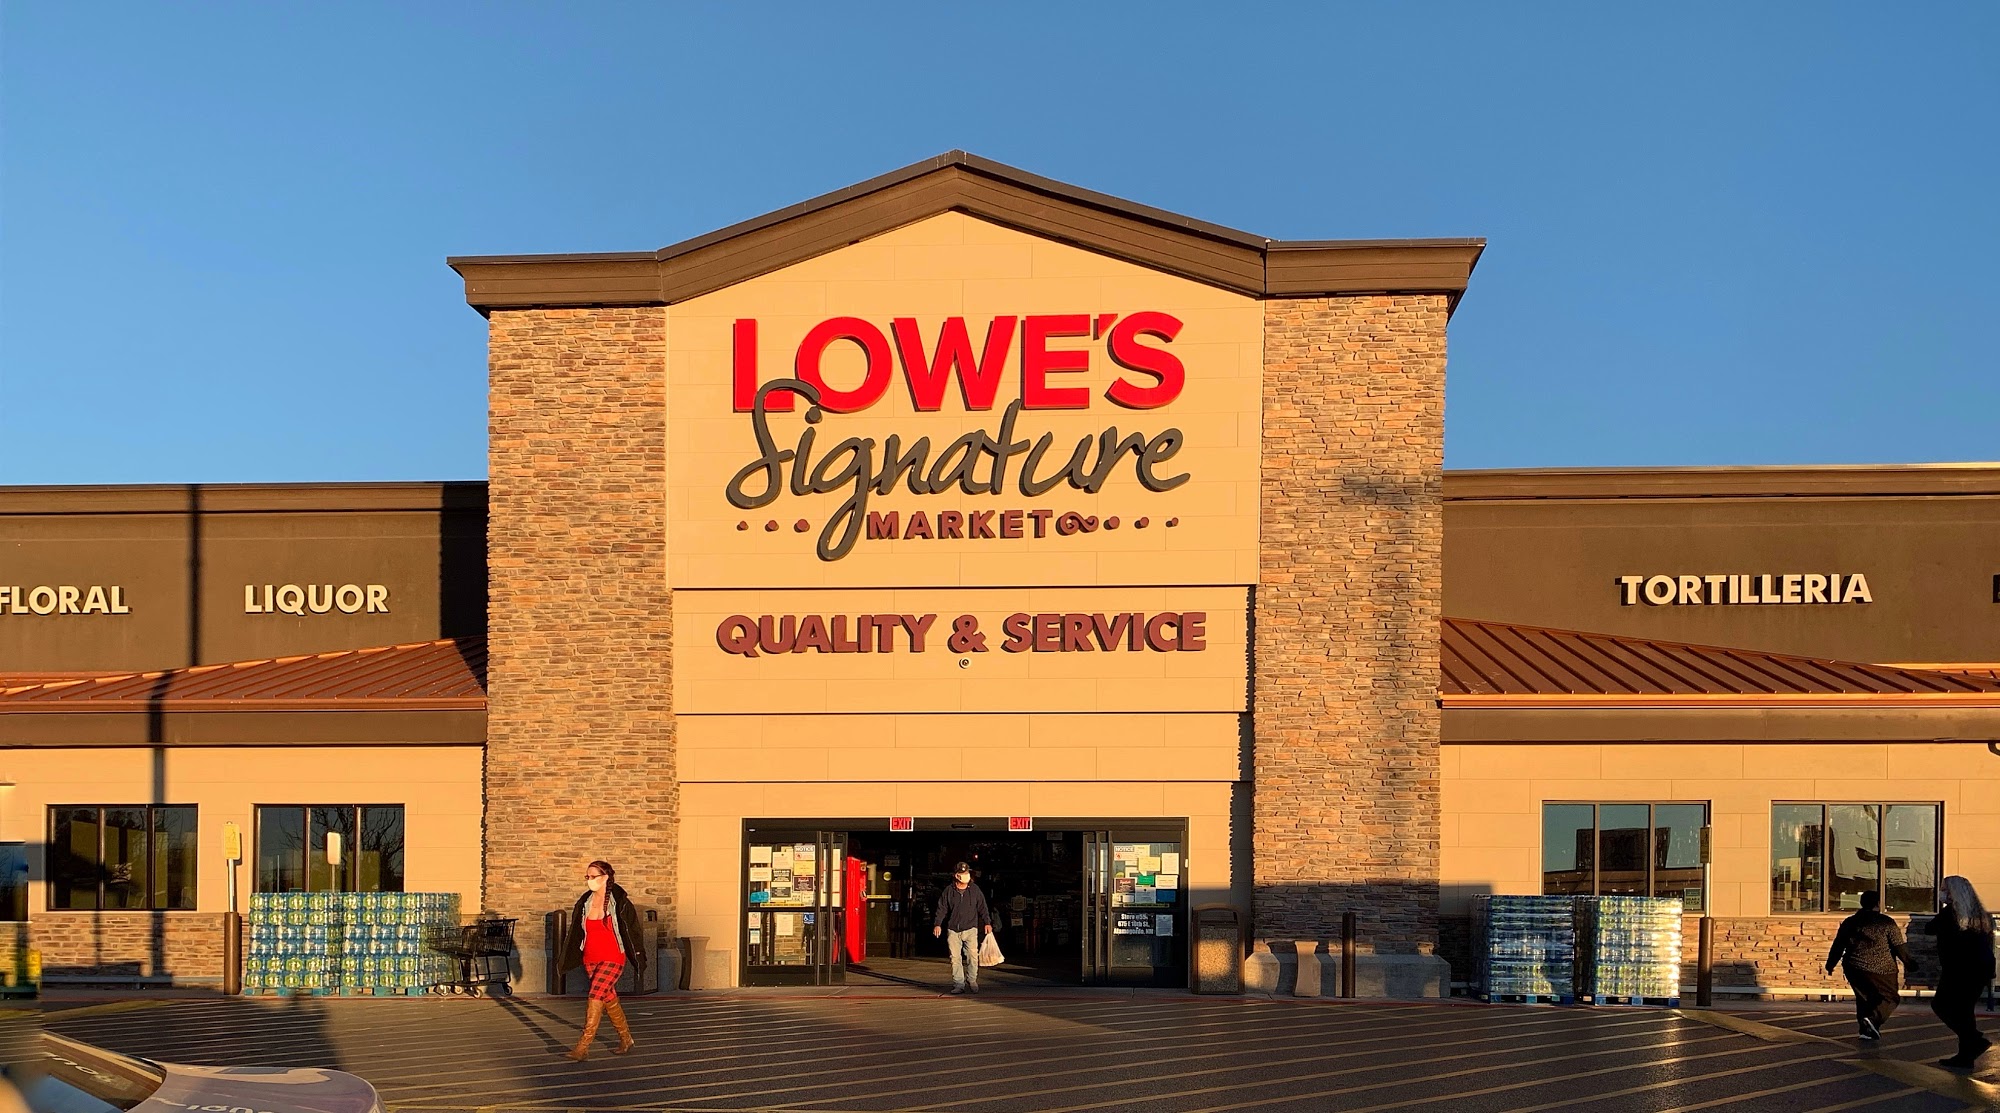 Lowe's Signature Market